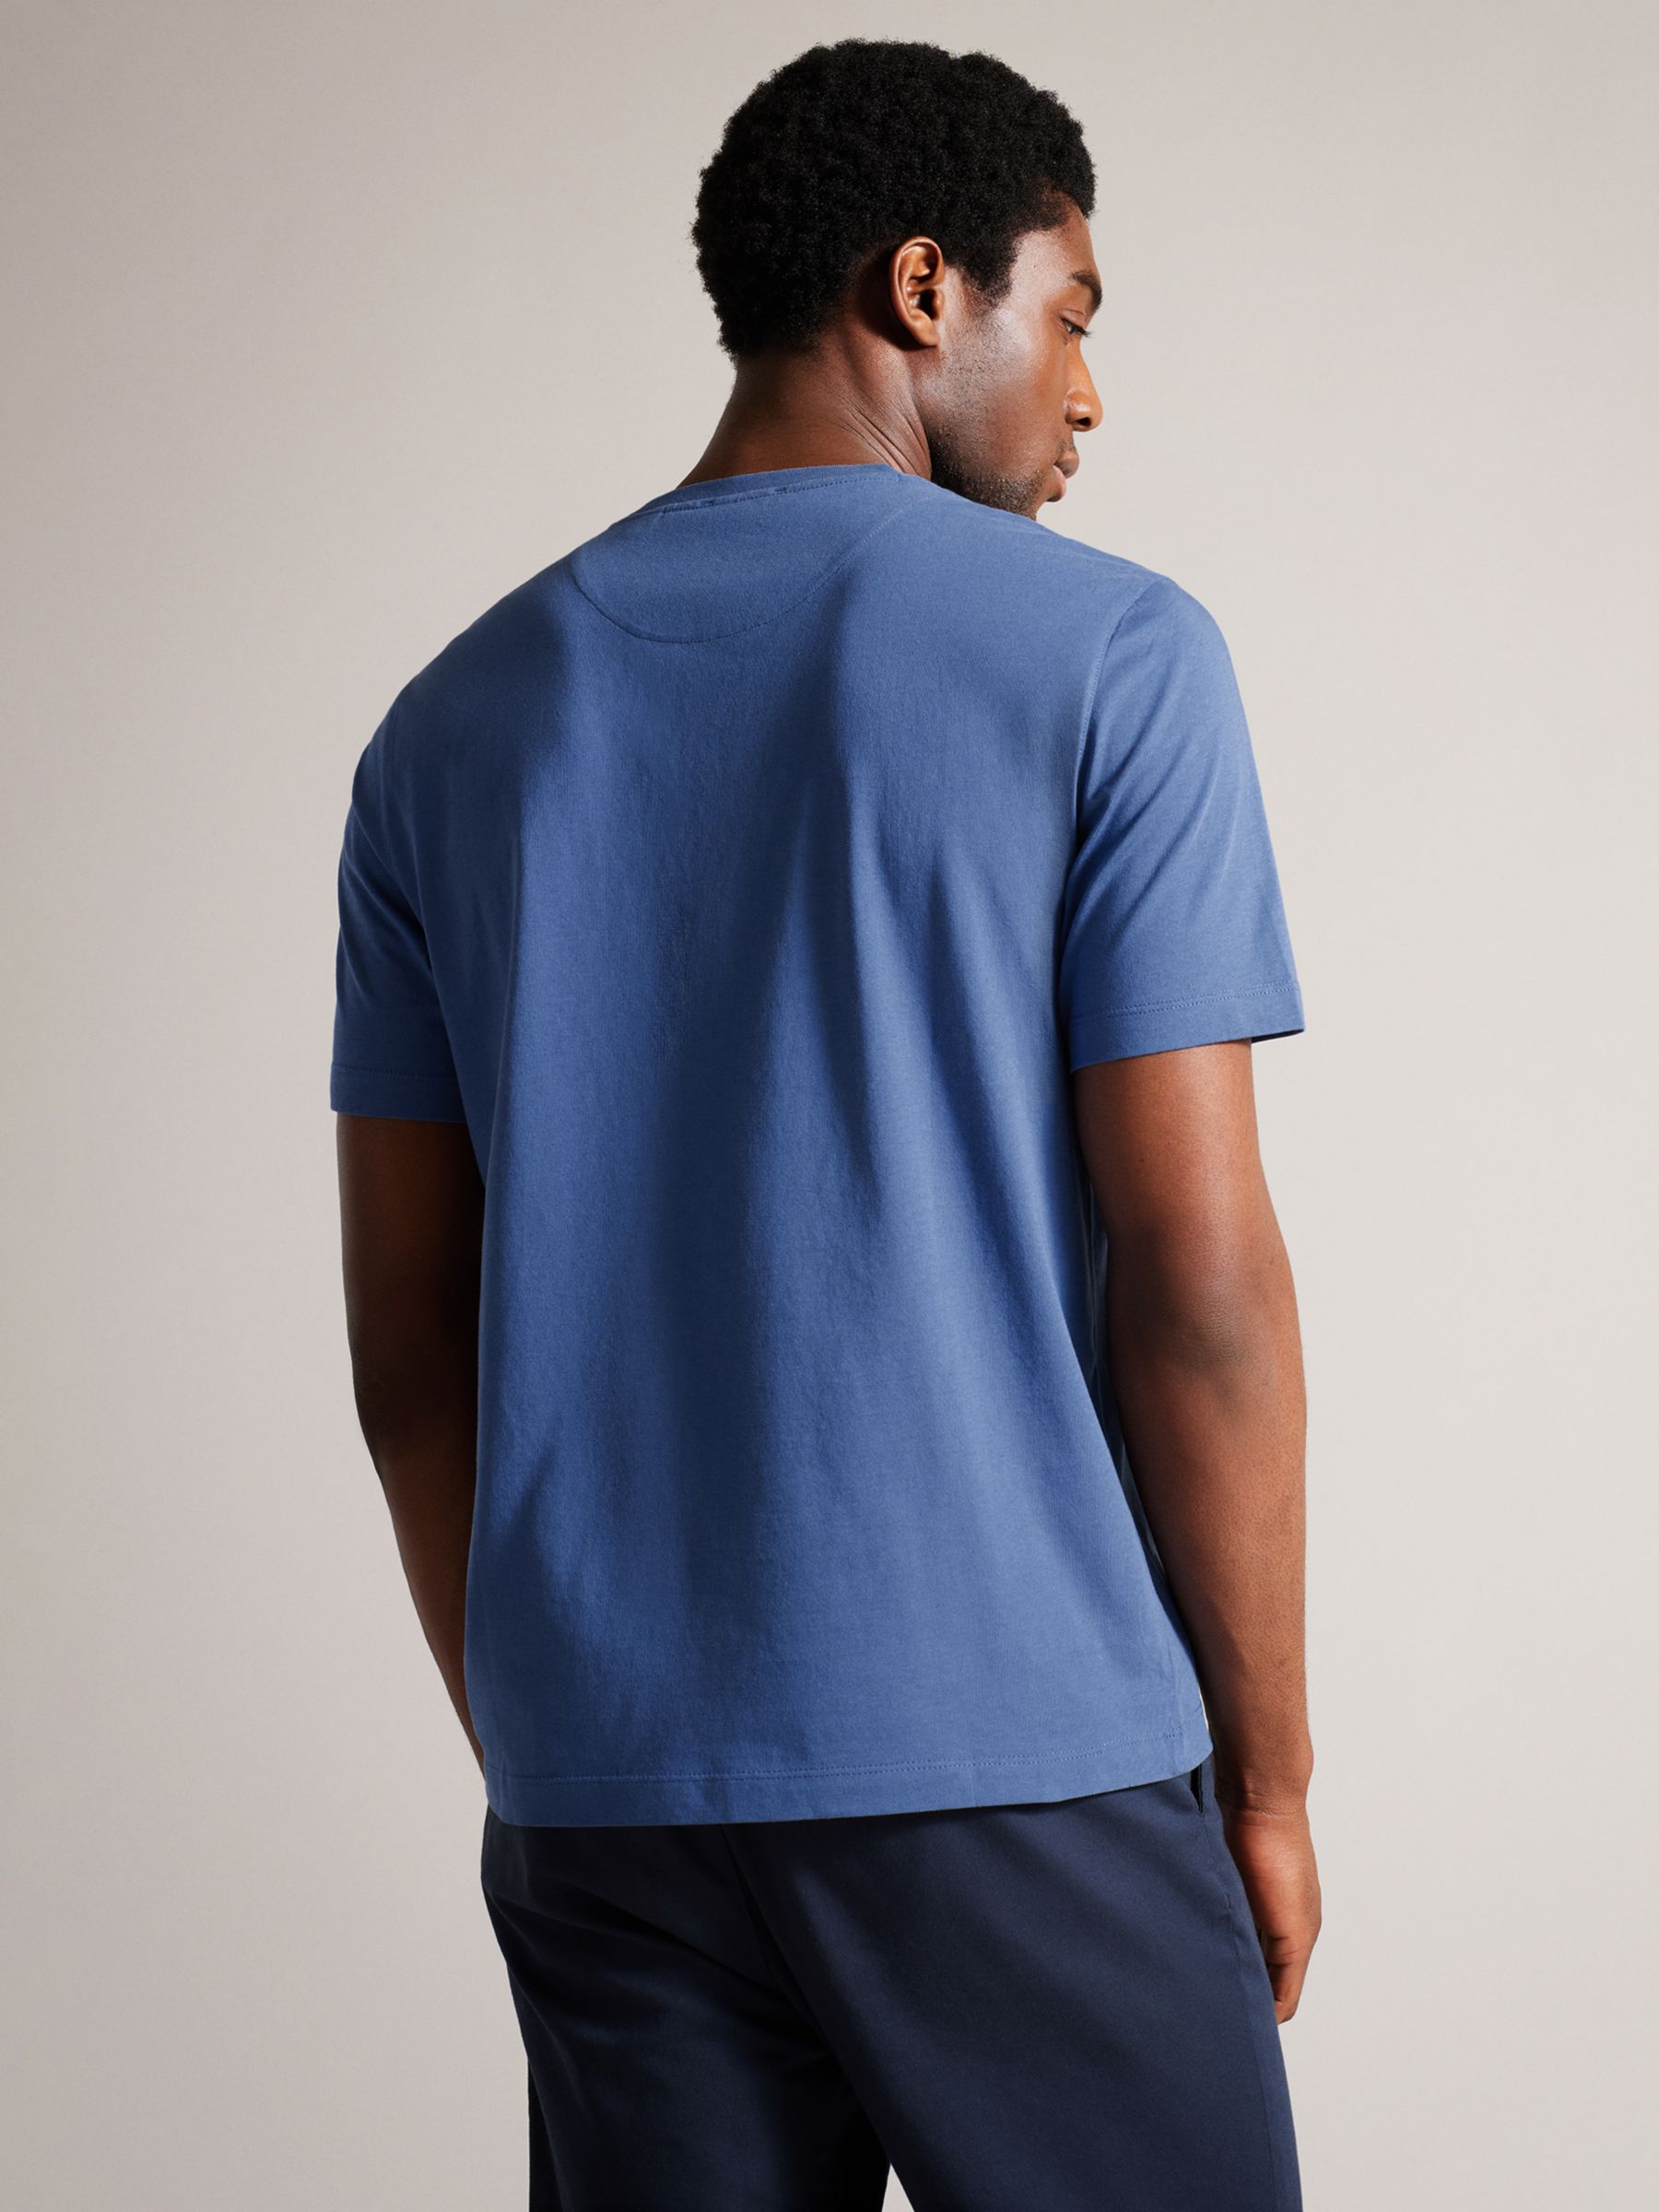 Ted Baker Short Sleeve Regular Plain T-Shirt, Blue at John Lewis & Partners